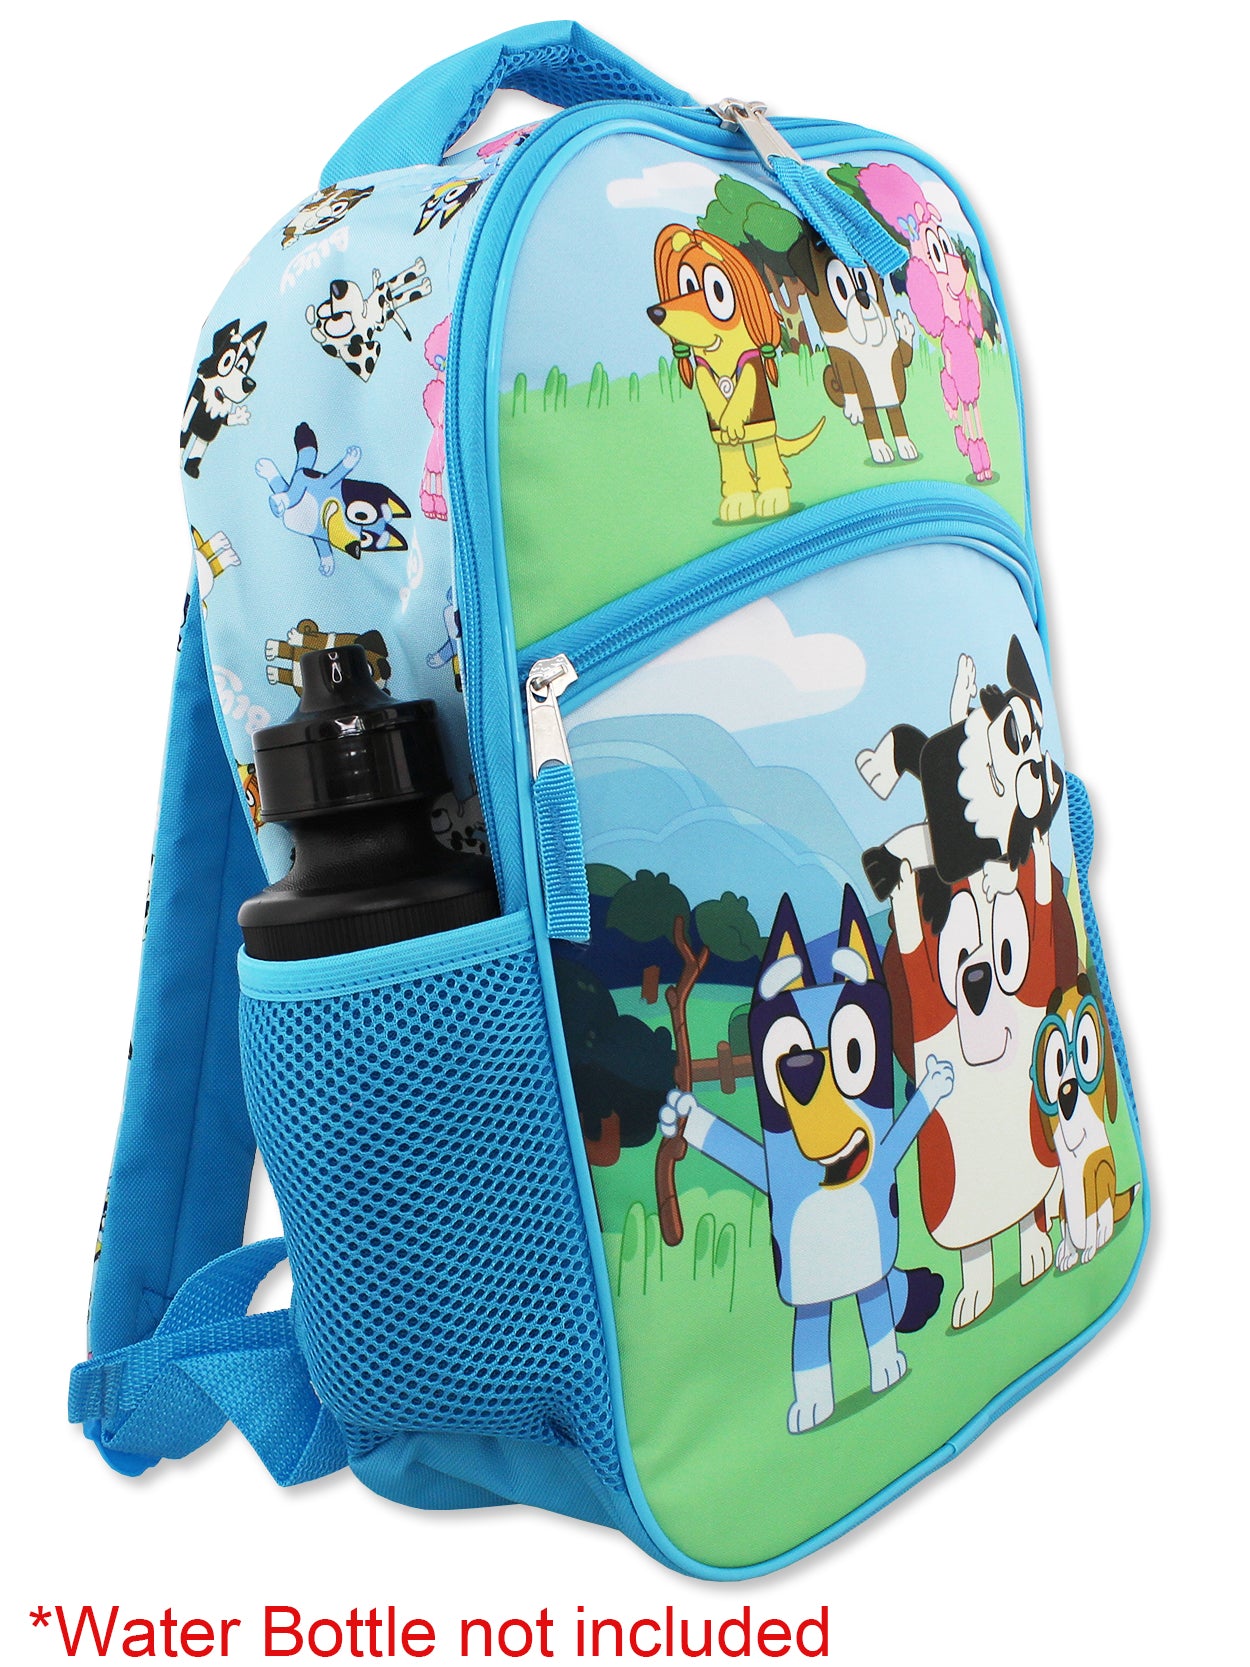 Bluey Kids 16 Inch School Backpack (One Size, Blue)